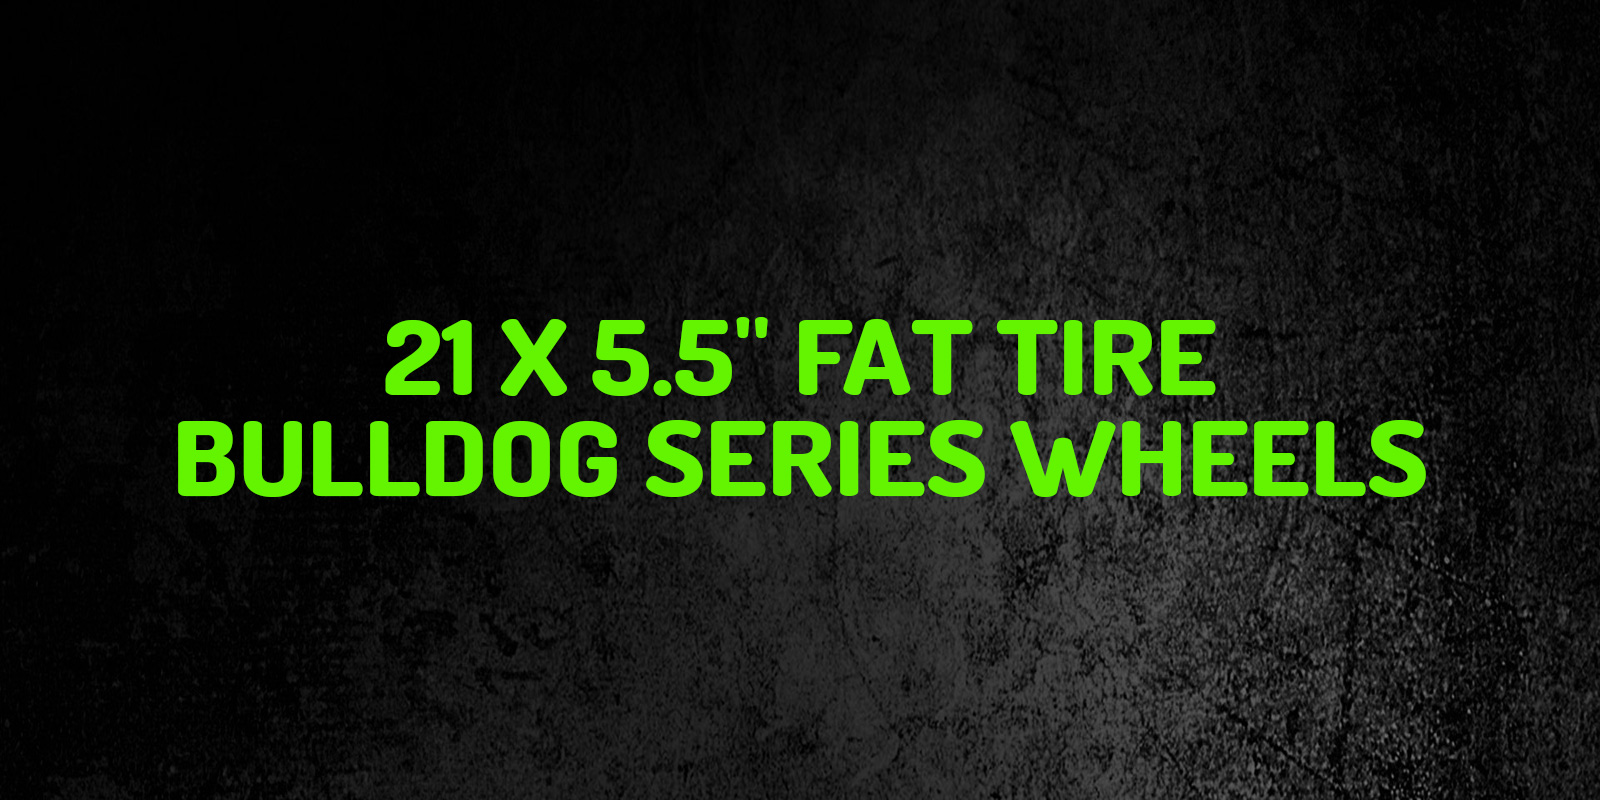 21 x 5.5" Fat Tire Bulldog Series Motorcycle Wheels